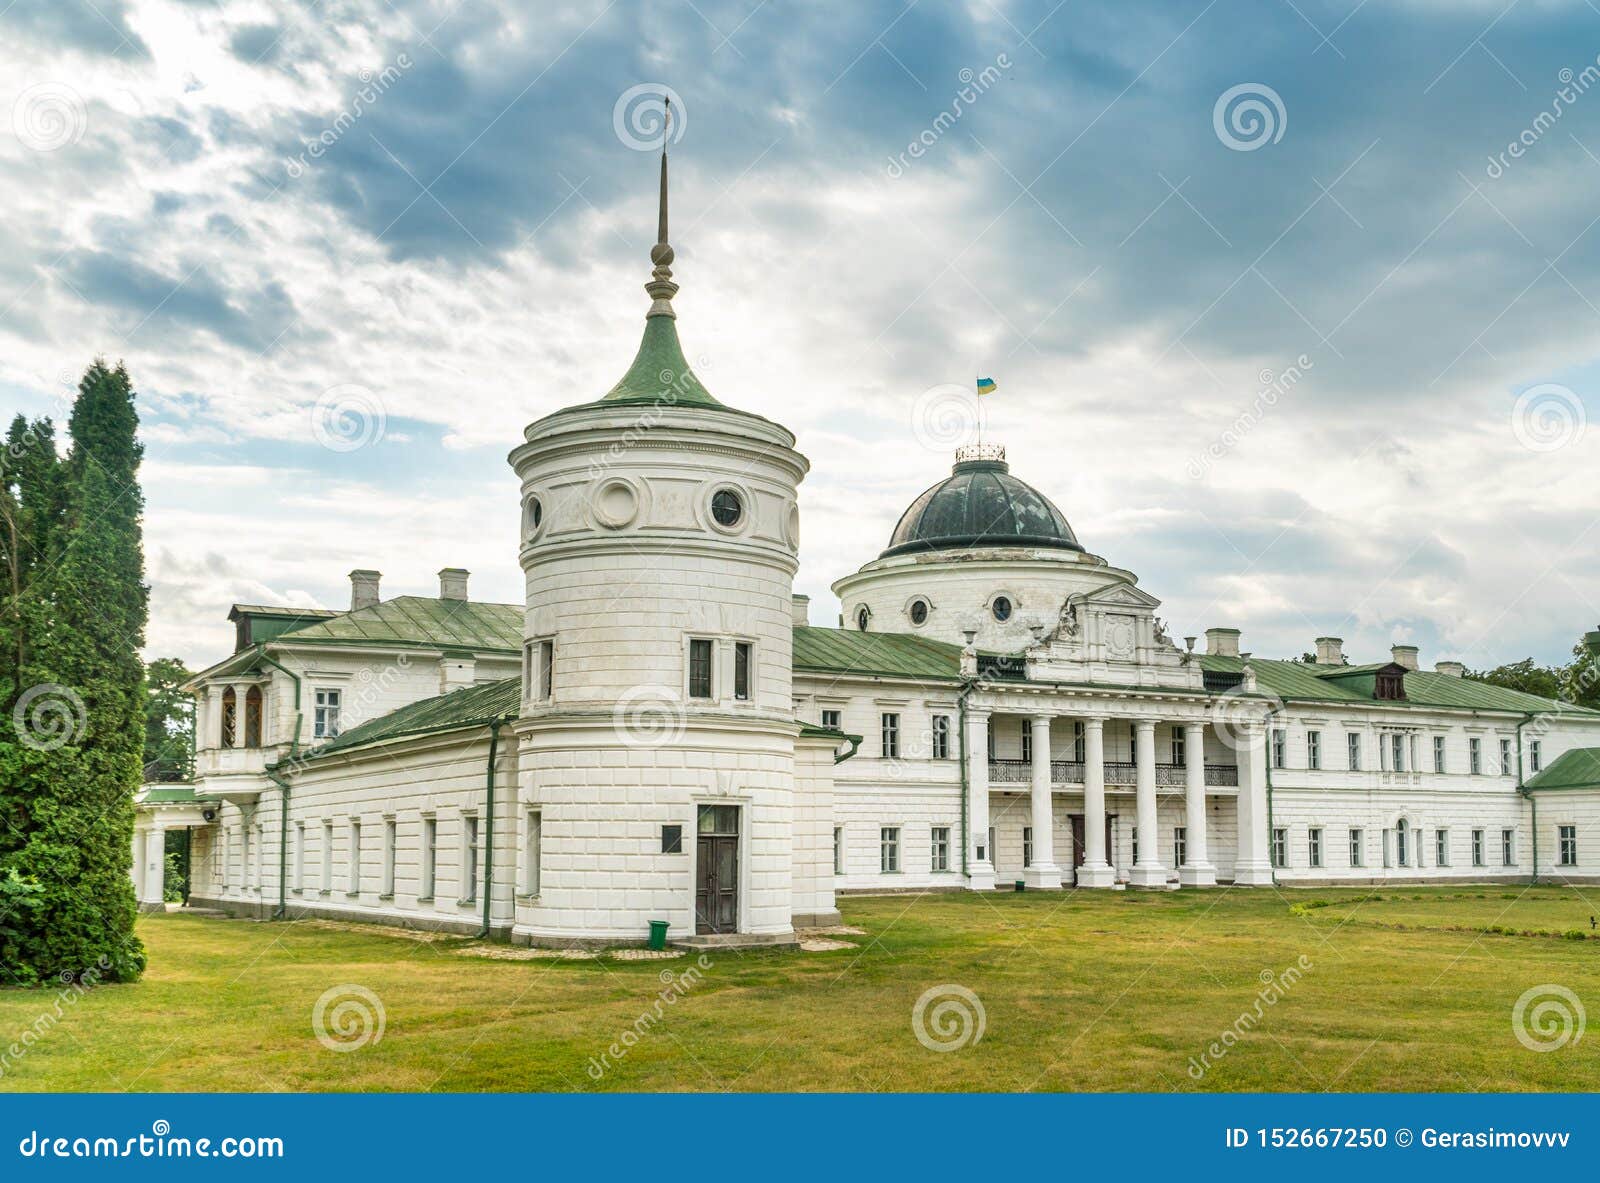 palace in kachanivka kachanovka national nature reserve, chernihiv region, ukraine